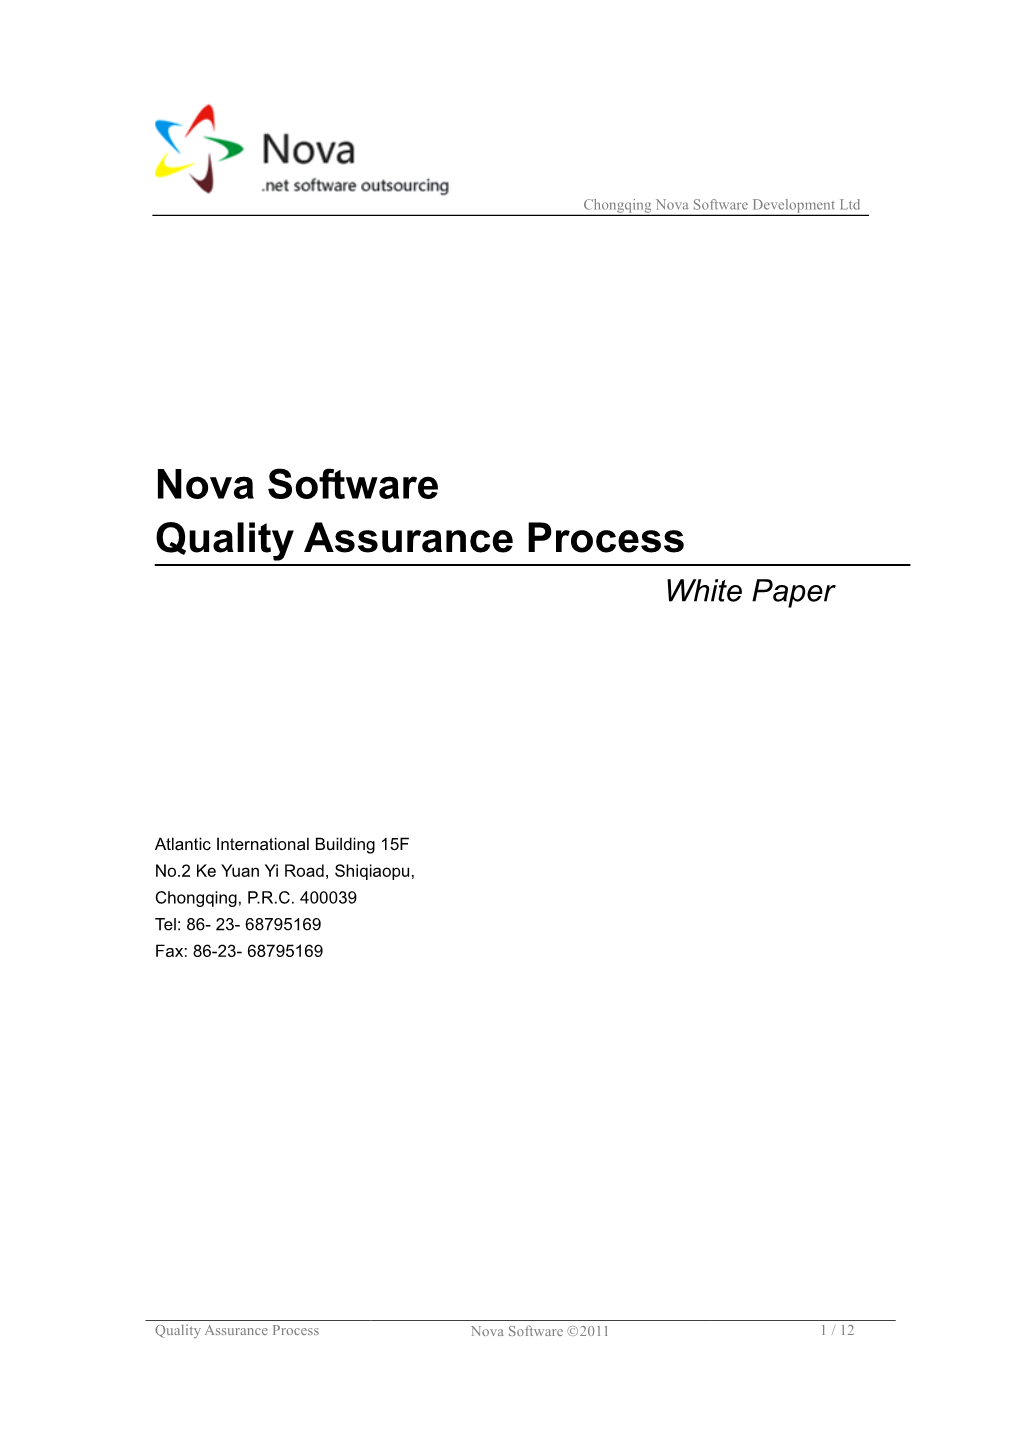 Nova Software Quality Assurance Process White Paper